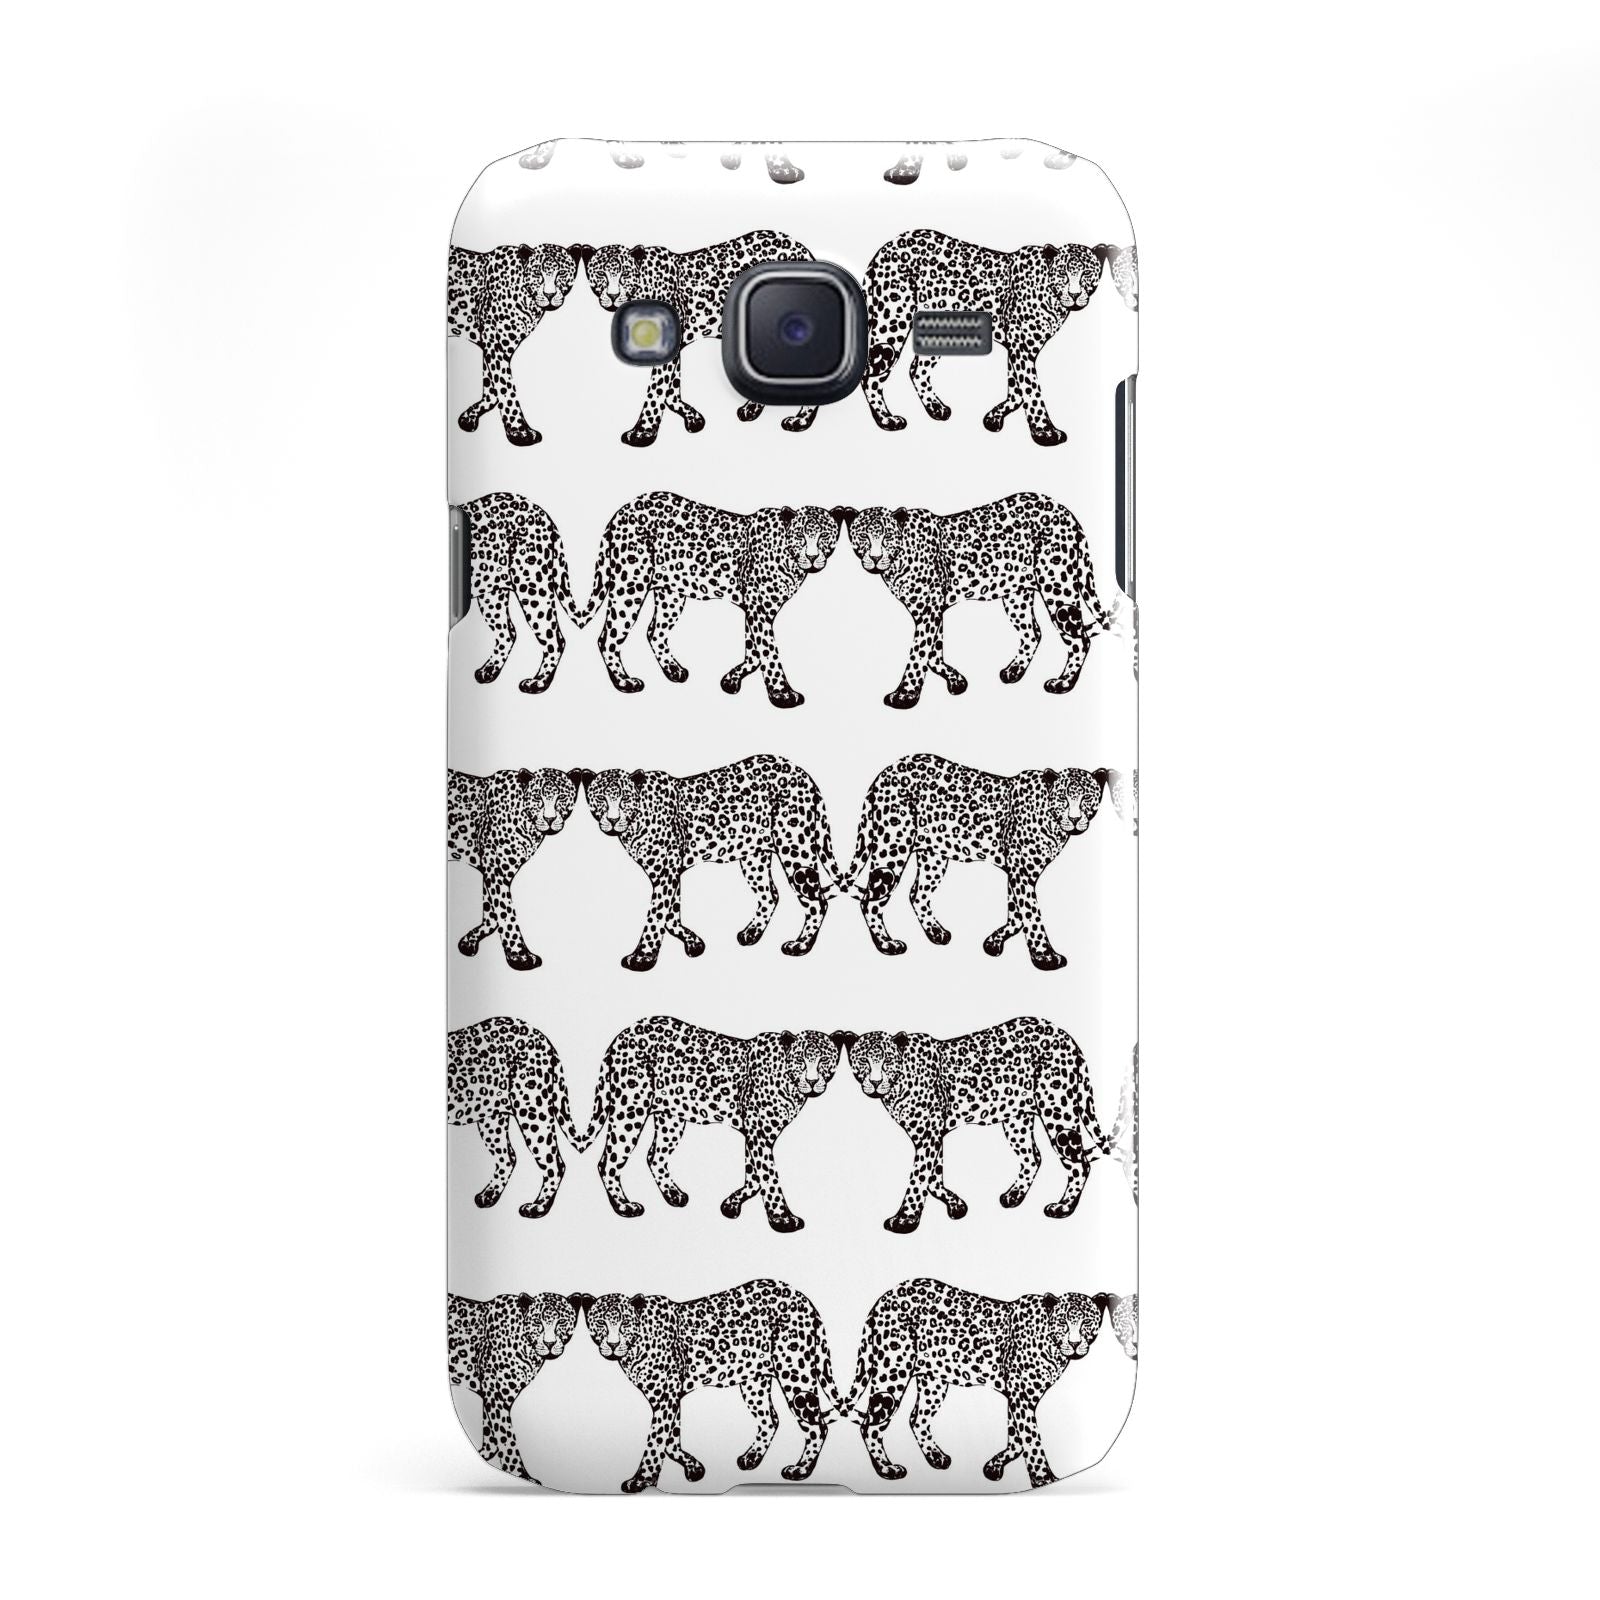 Monochrome Mirrored Leopard Print Samsung Galaxy J5 Case